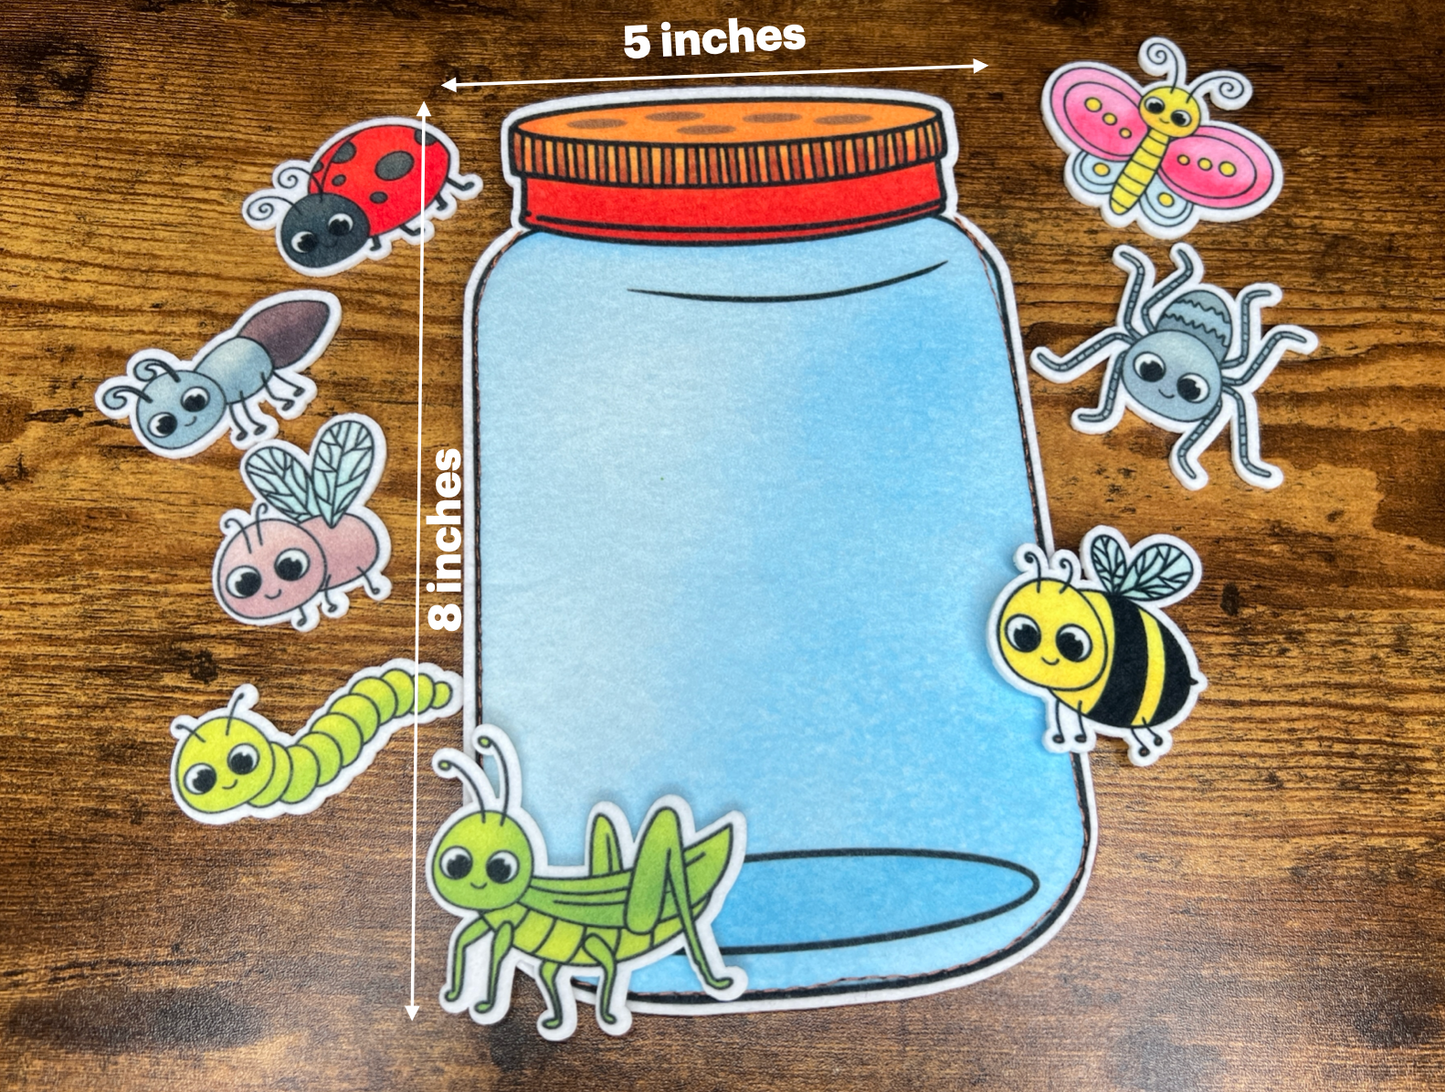 Felt Story Companion Set for Jacob's Bug Collection~ Felt bug jar and bugs (from book)